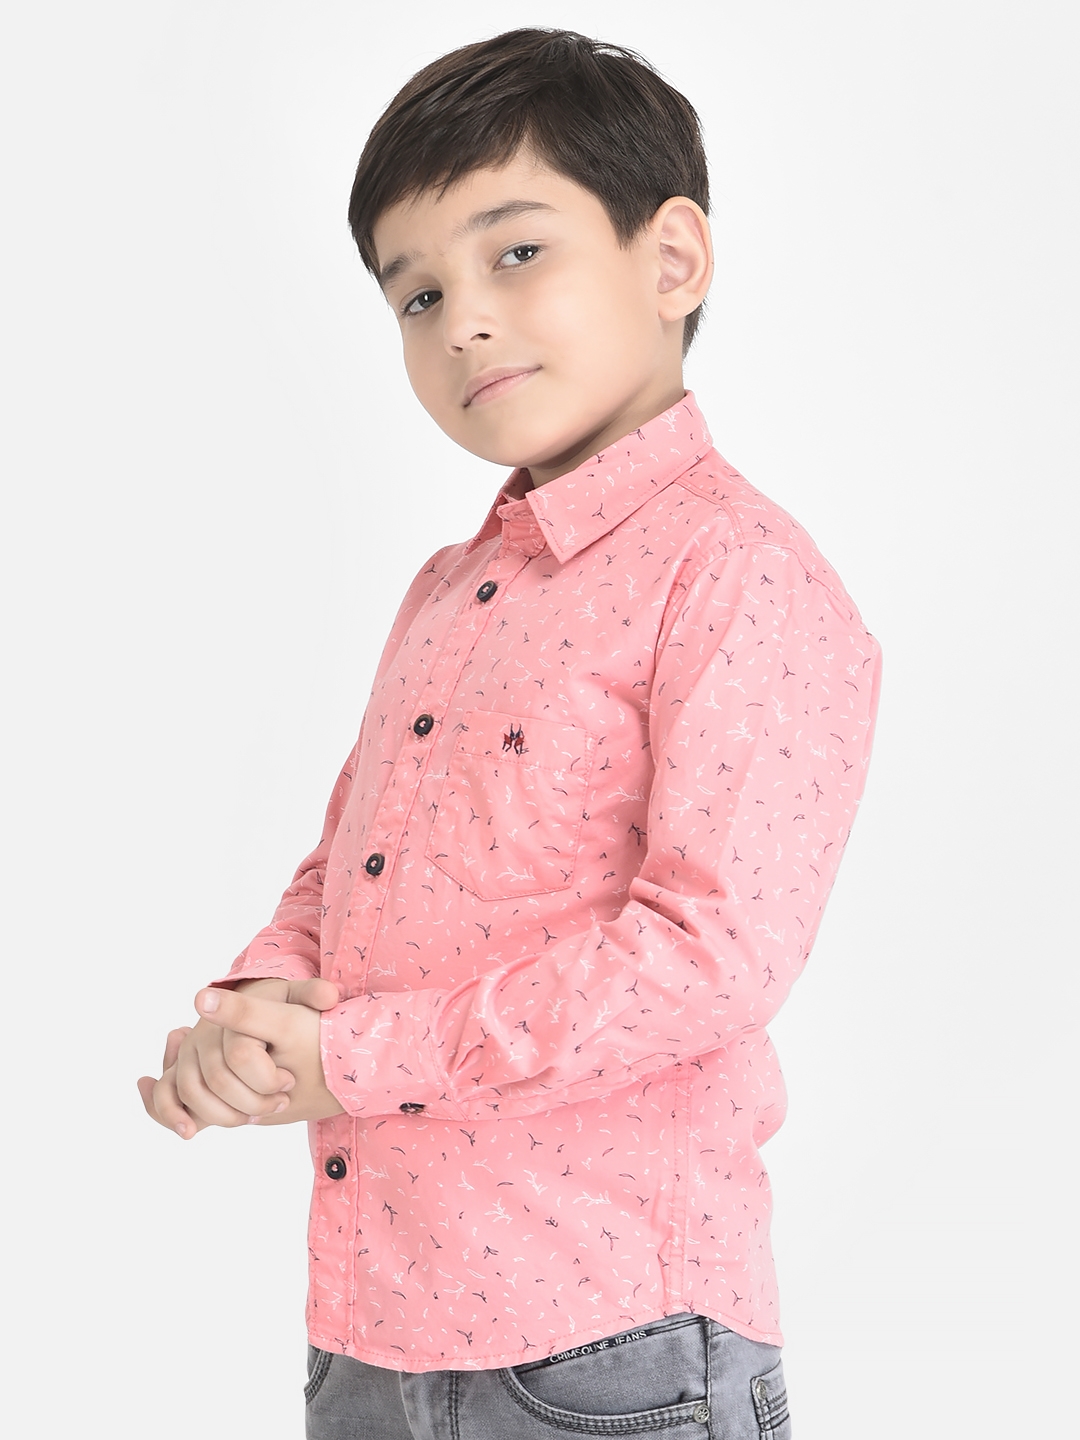 Crimsoune Club Boy Pink Shirt in Floral Print 